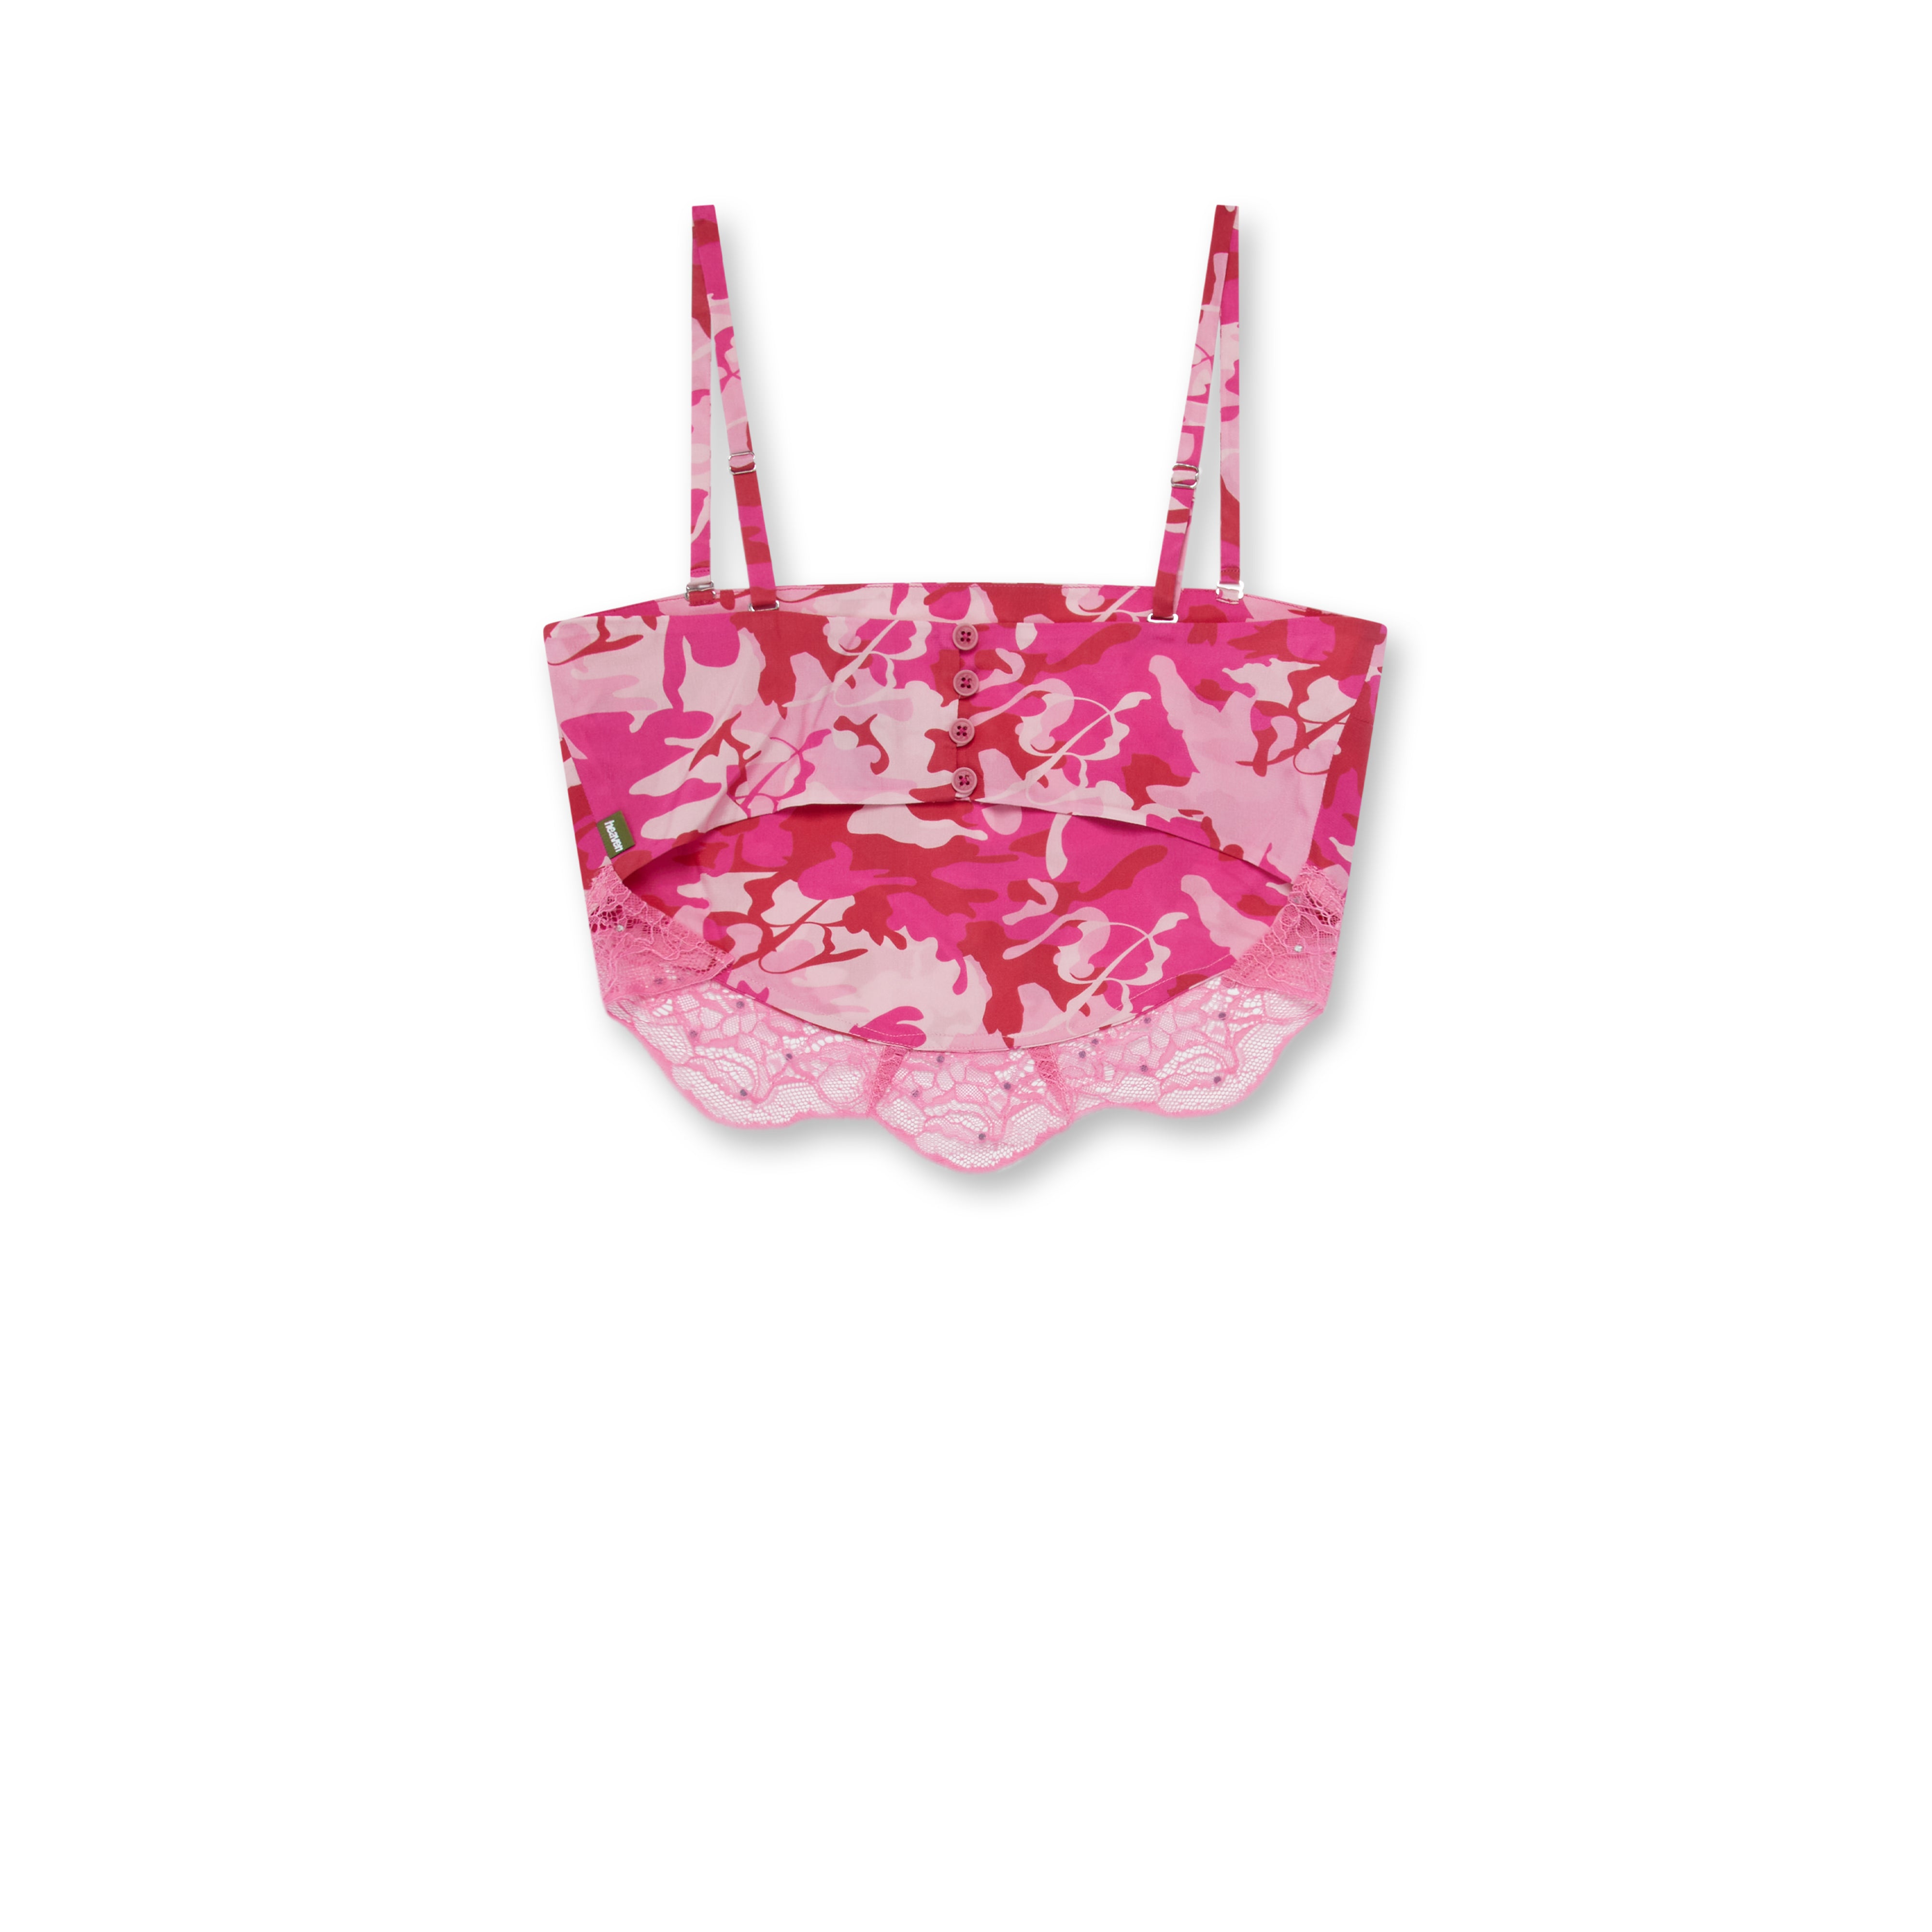 Blumarine by Marc Jacobs - Women's Pink Camo Bandana Lace Top - (Pink Multi)